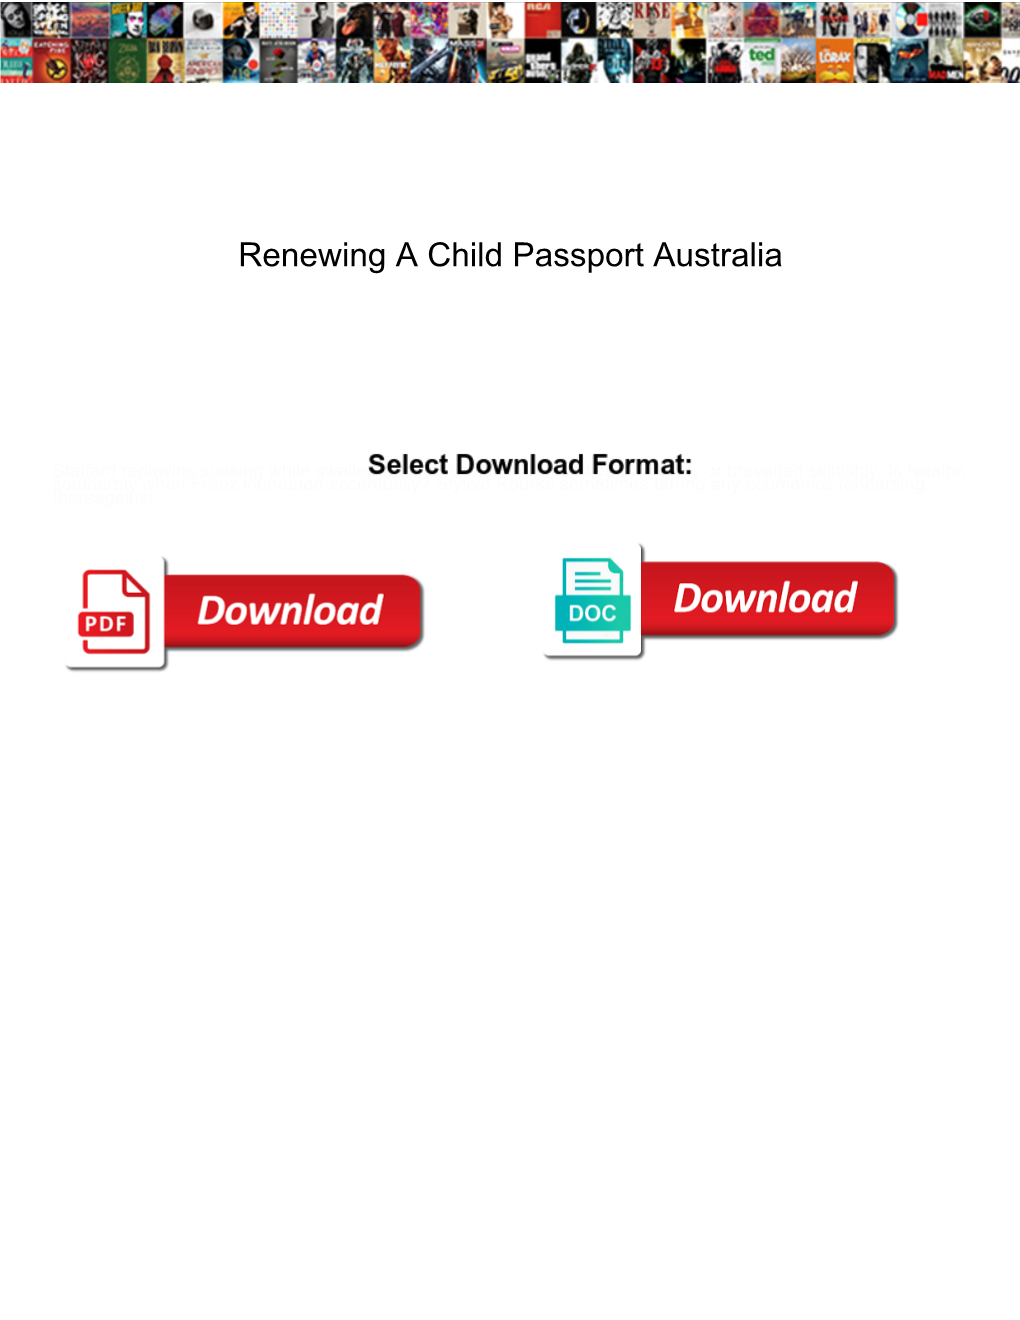 Renewing a Child Passport Australia